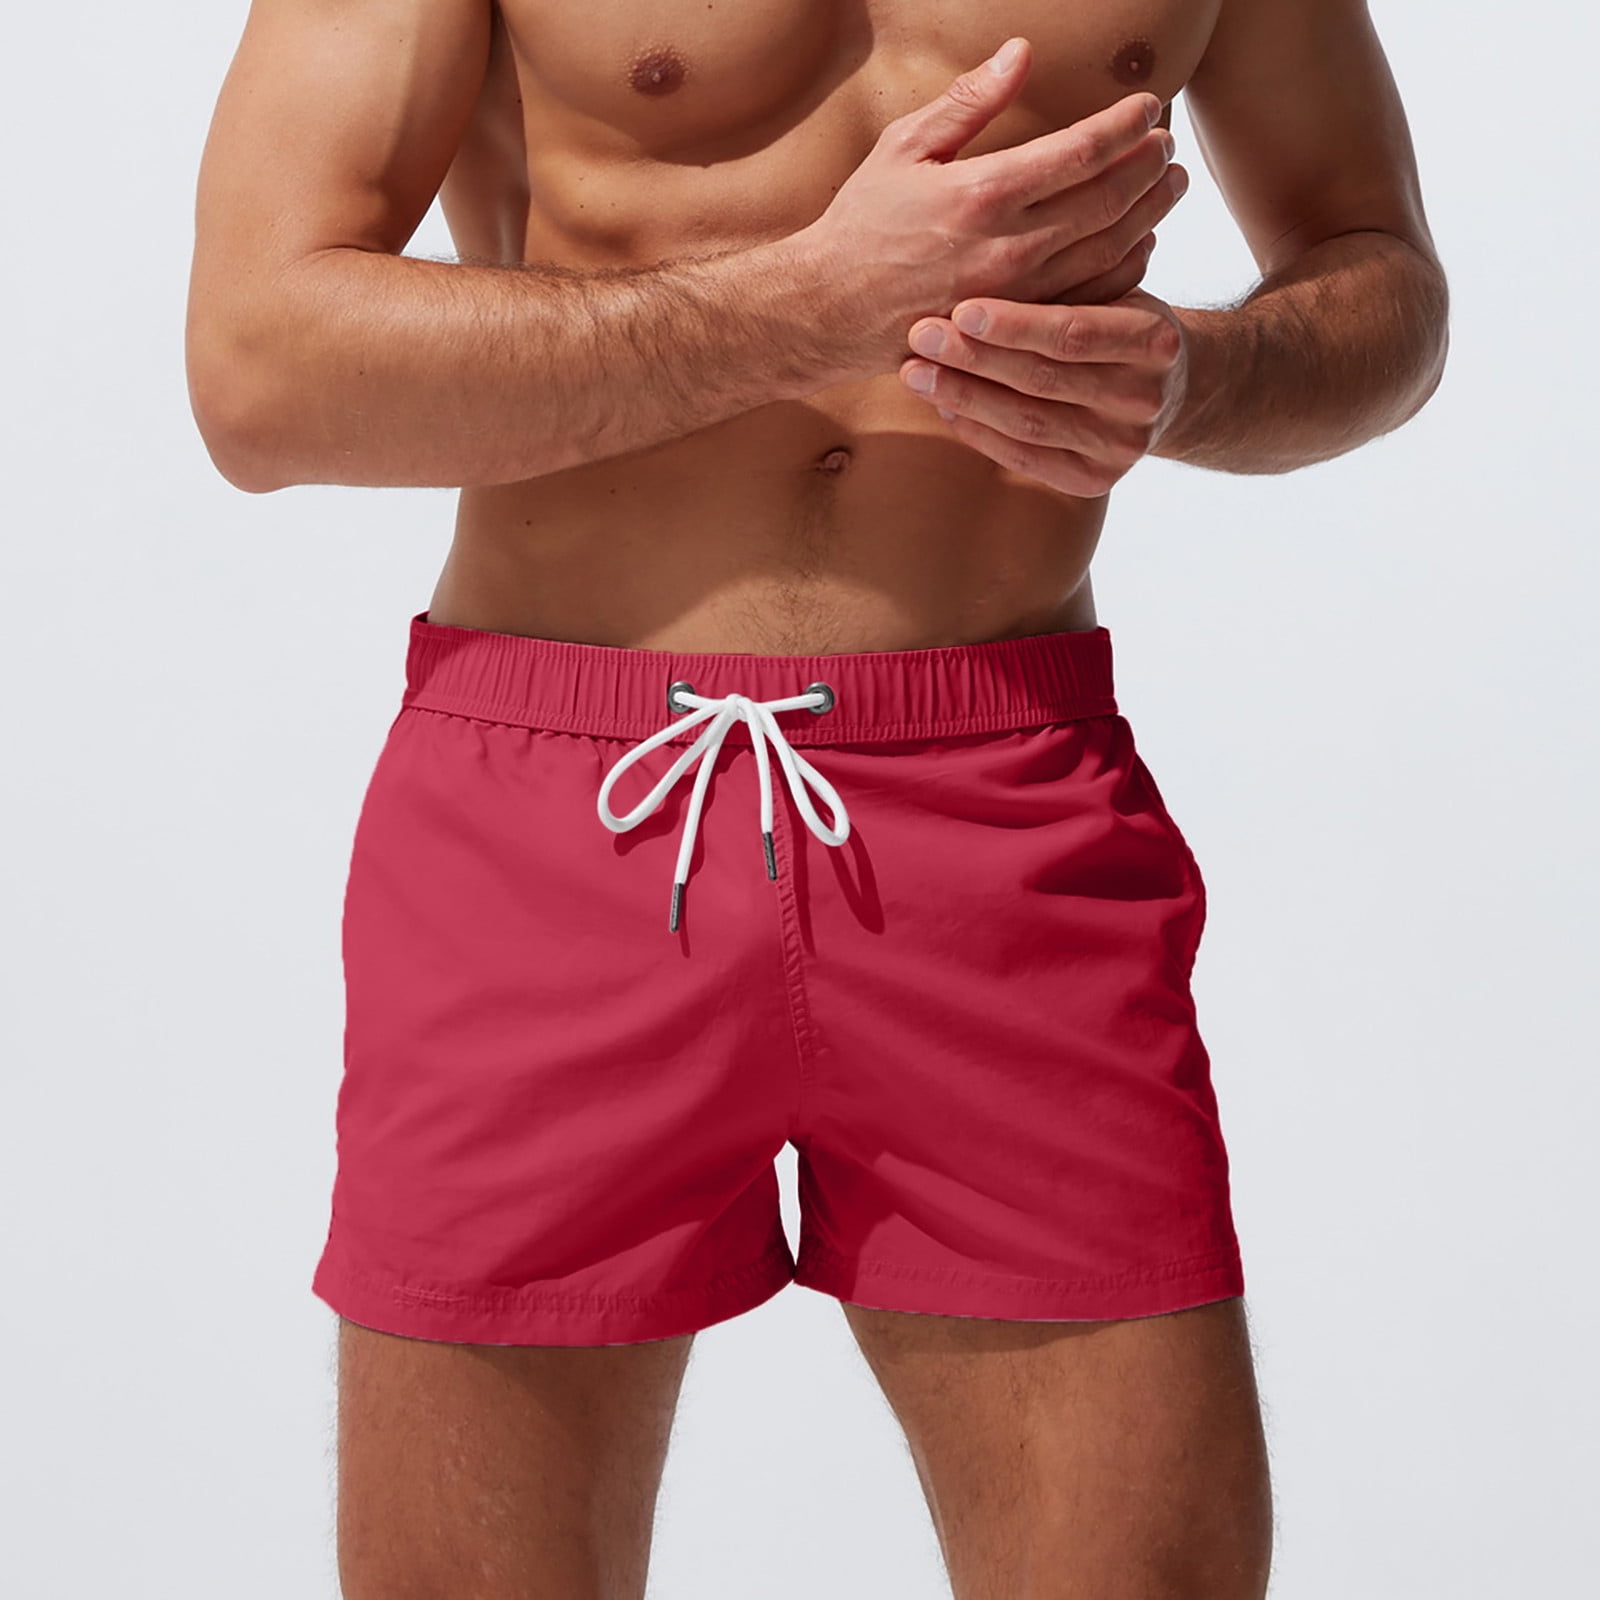 ELFINDEA Men's Swim Trunks Quick Dry Beach Shorts with Zipper Pockets ...